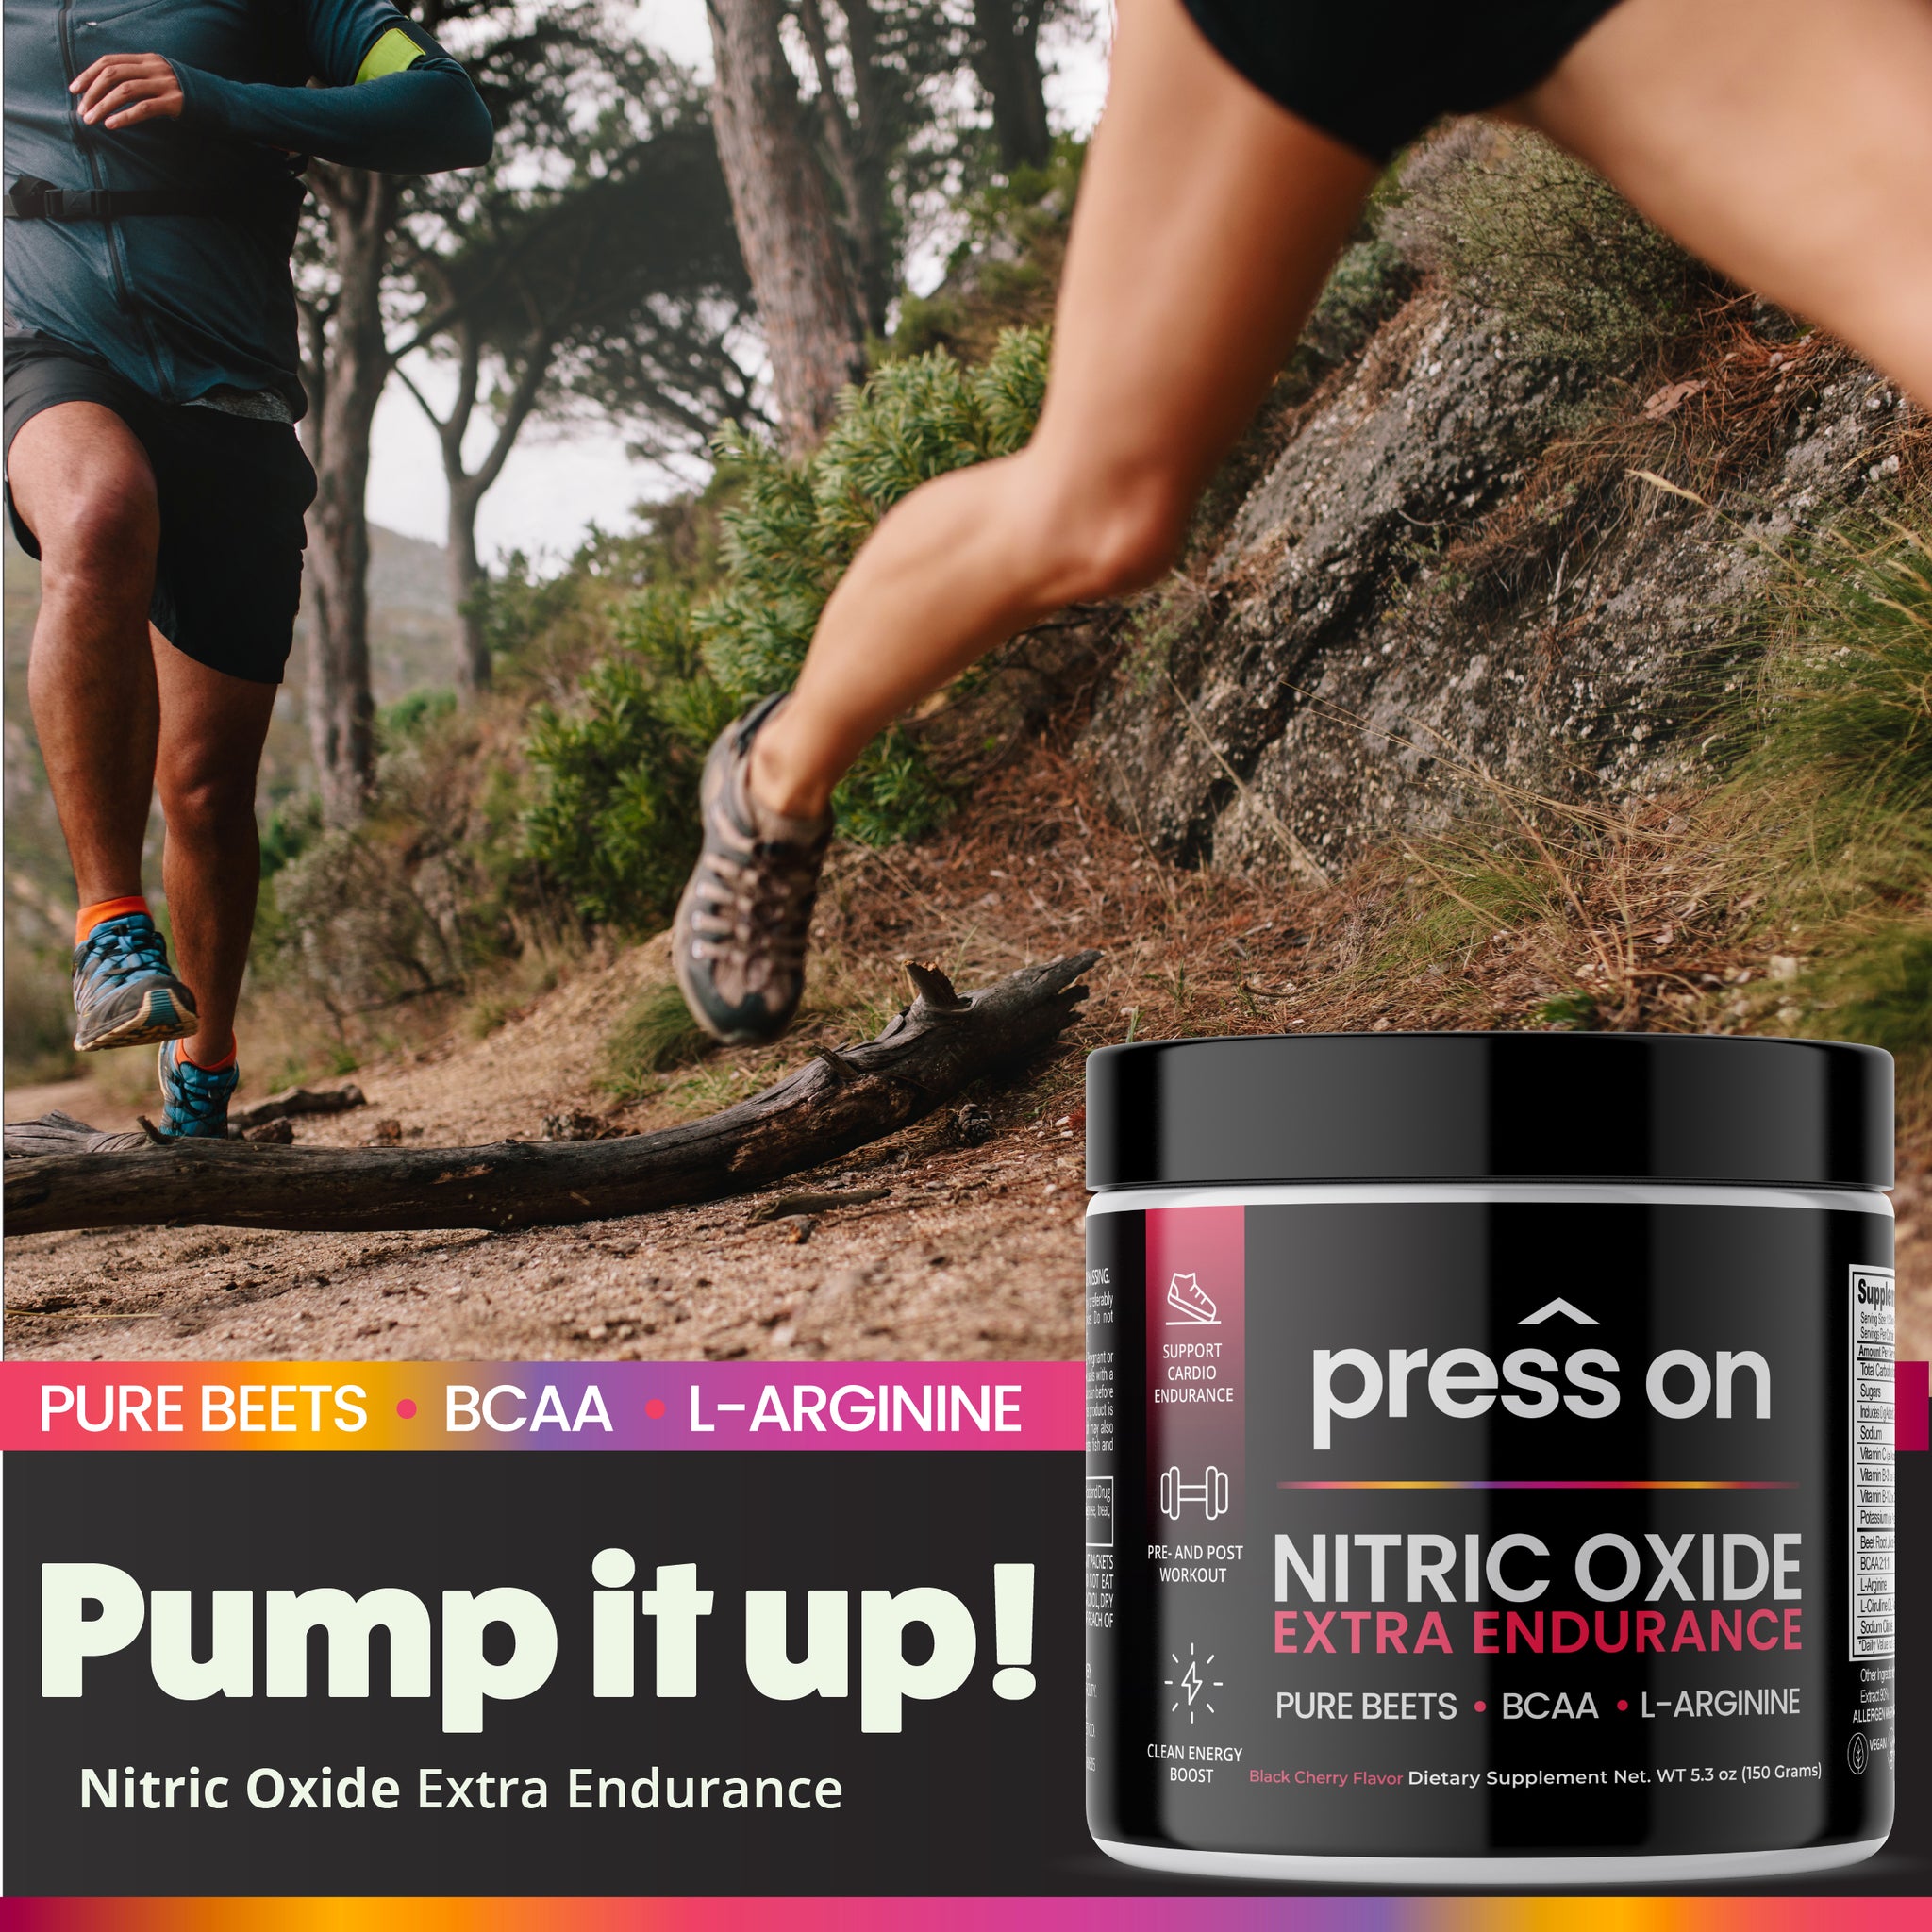 Nitric Oxide Extra Endurance